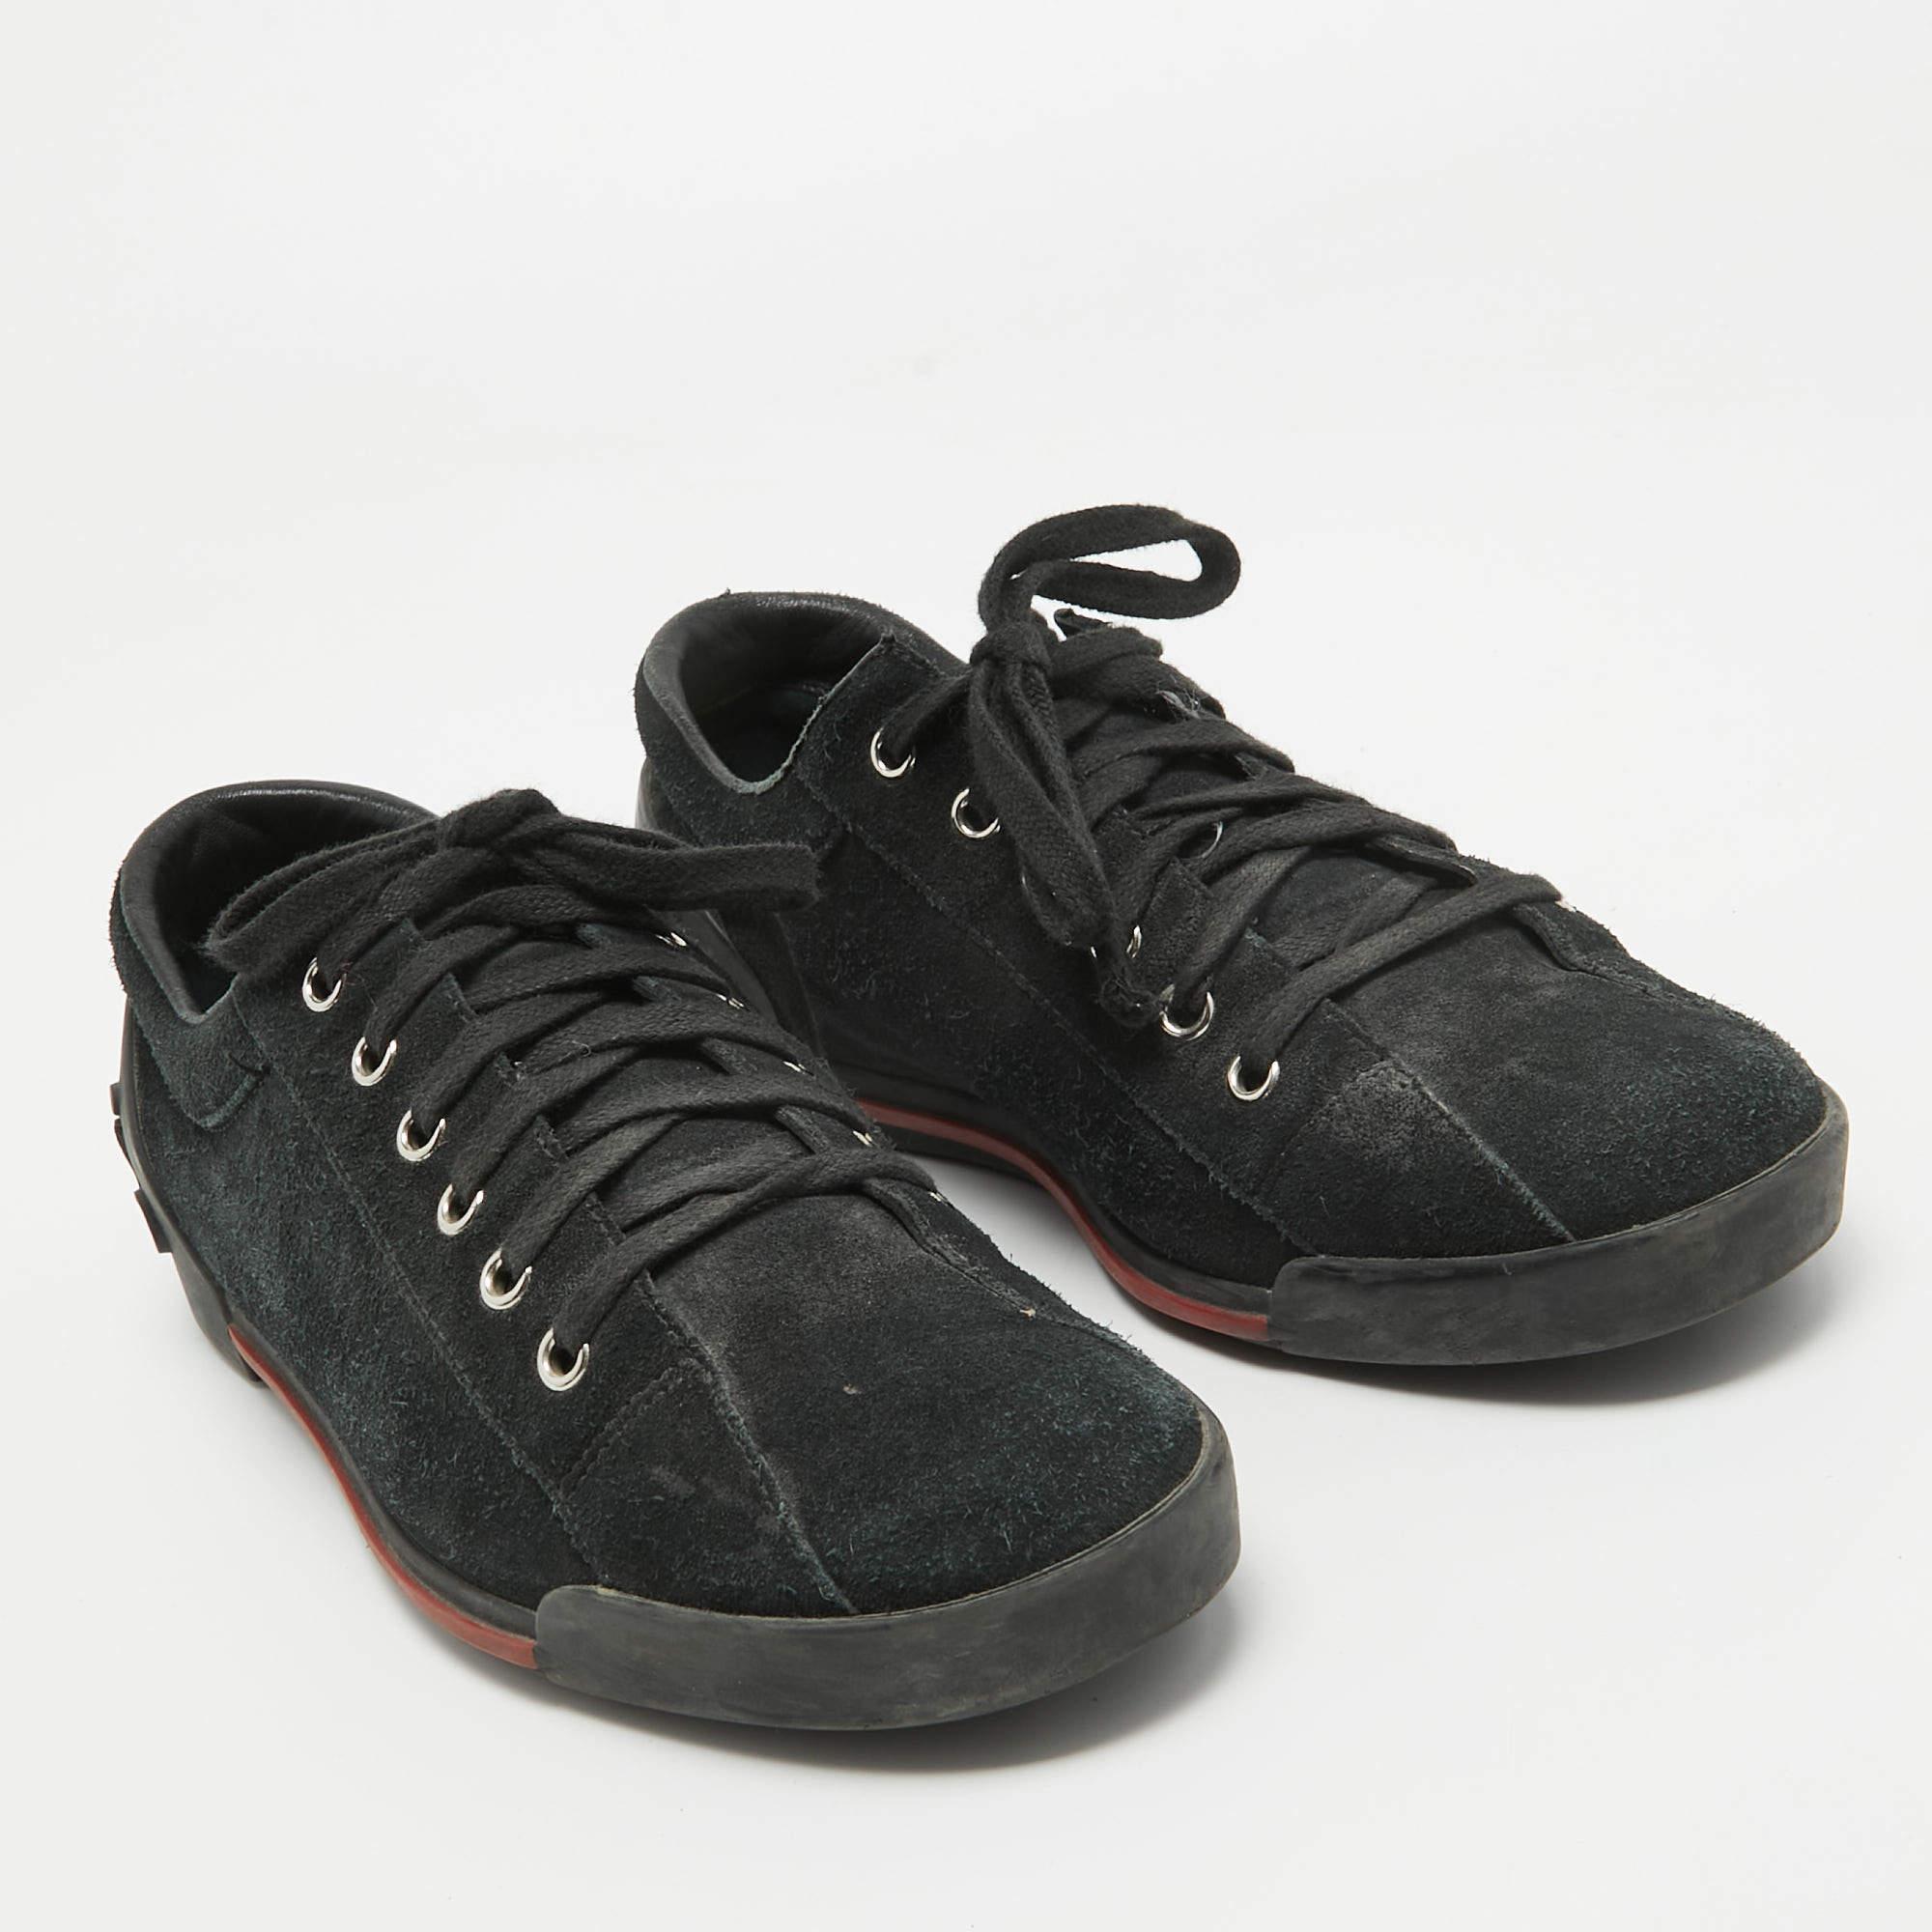 Gucci Black Suede Lace Up Sneakers Size 38 In Fair Condition For Sale In Dubai, Al Qouz 2